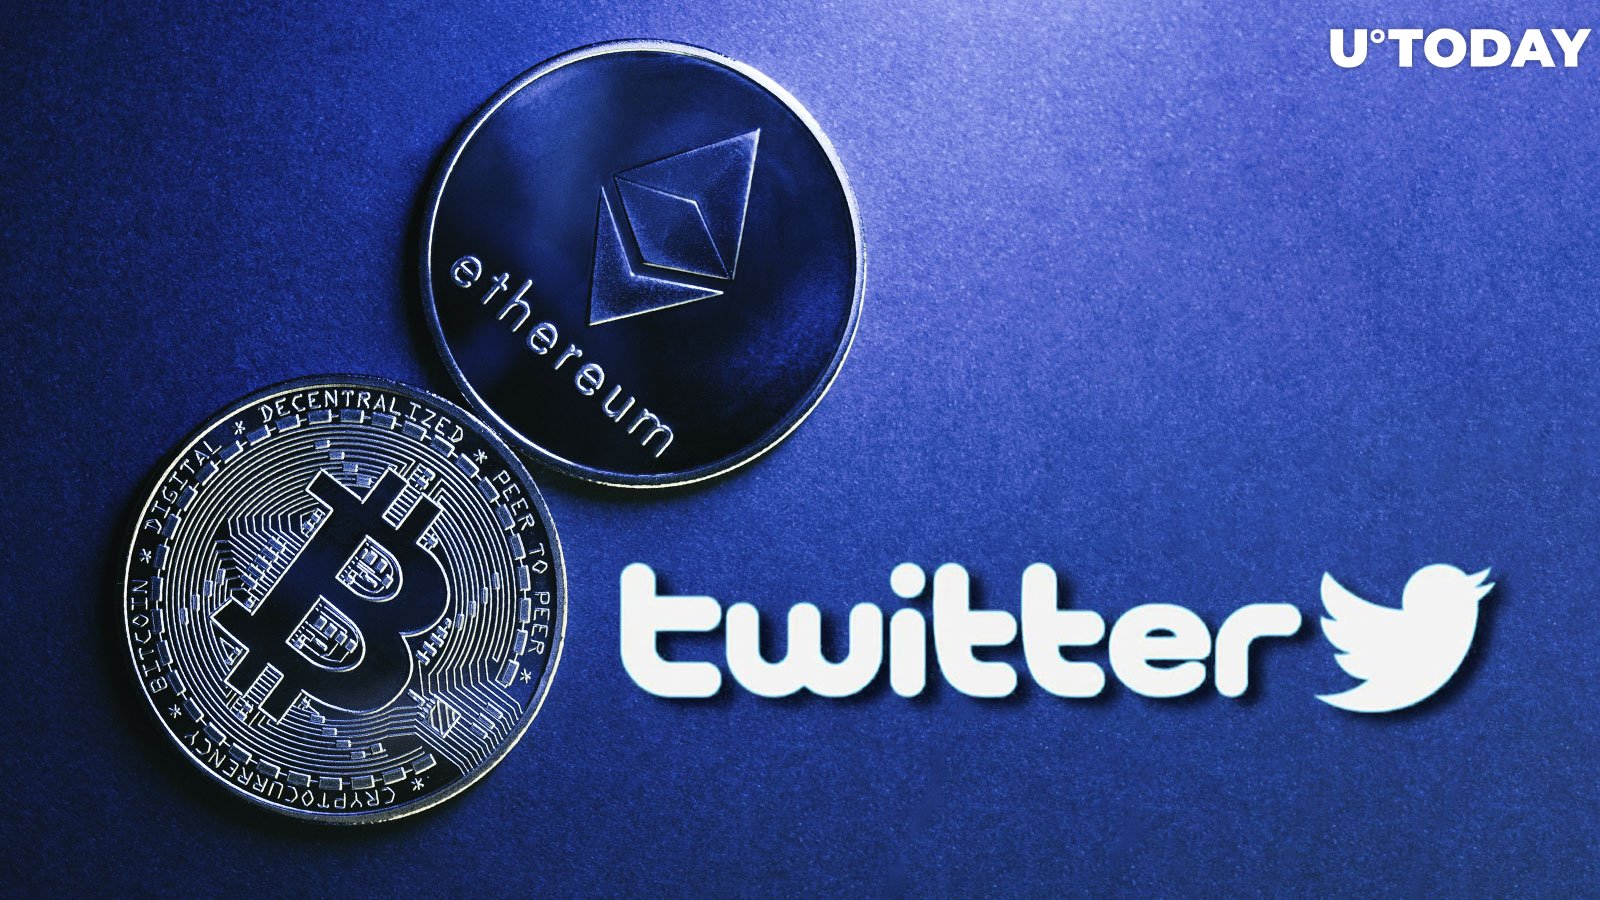 Bitcoin and Ethereum Garner Rising Interest on Twitter